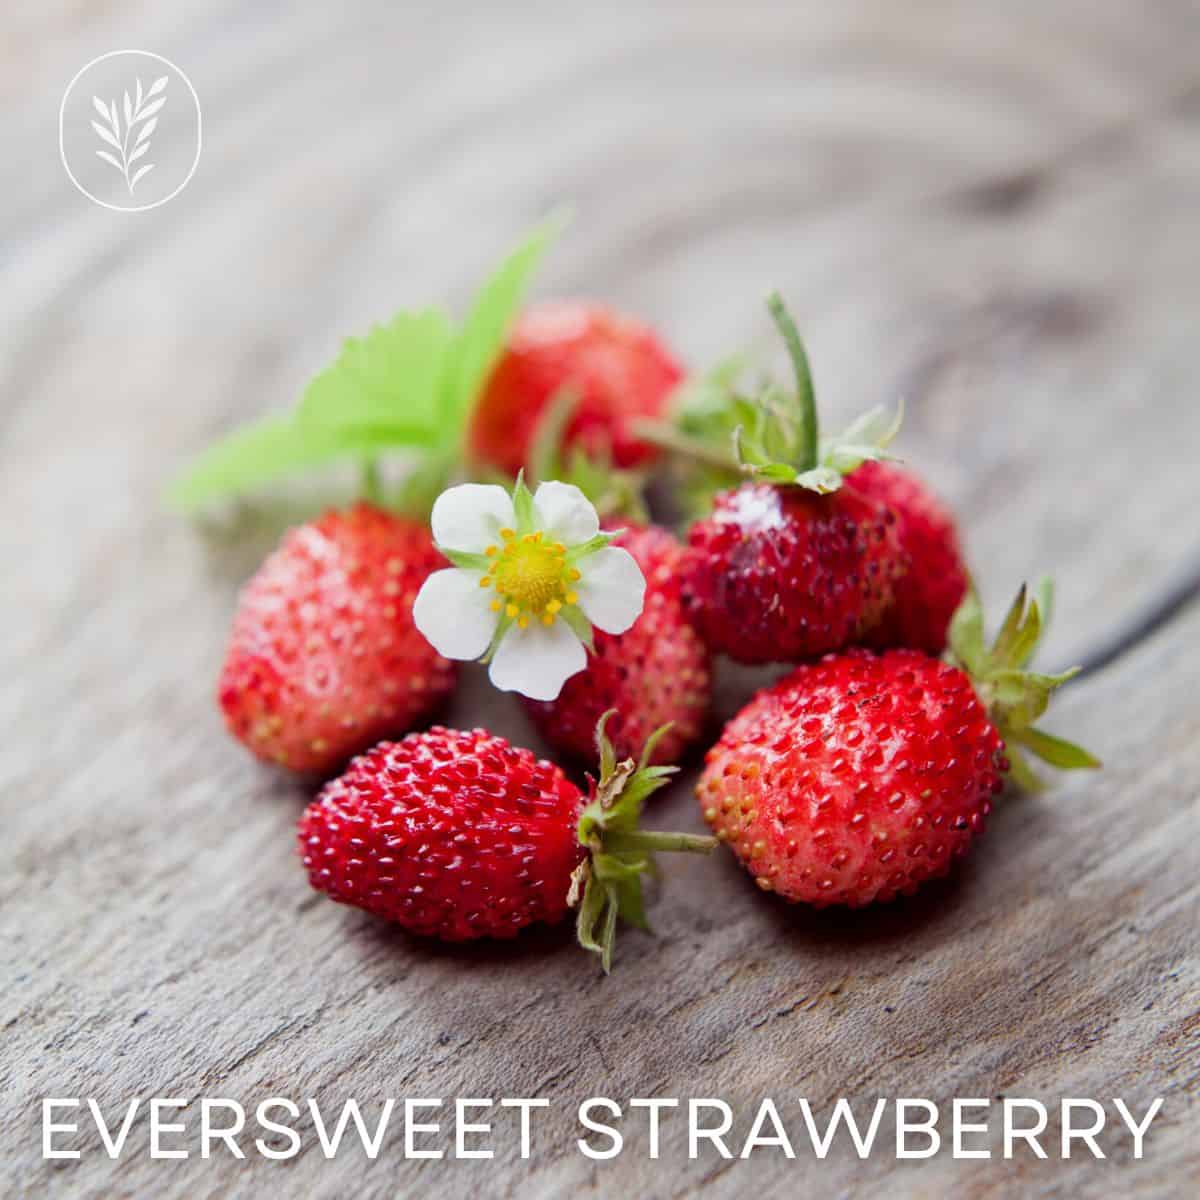 Eversweet strawberry via @home4theharvest